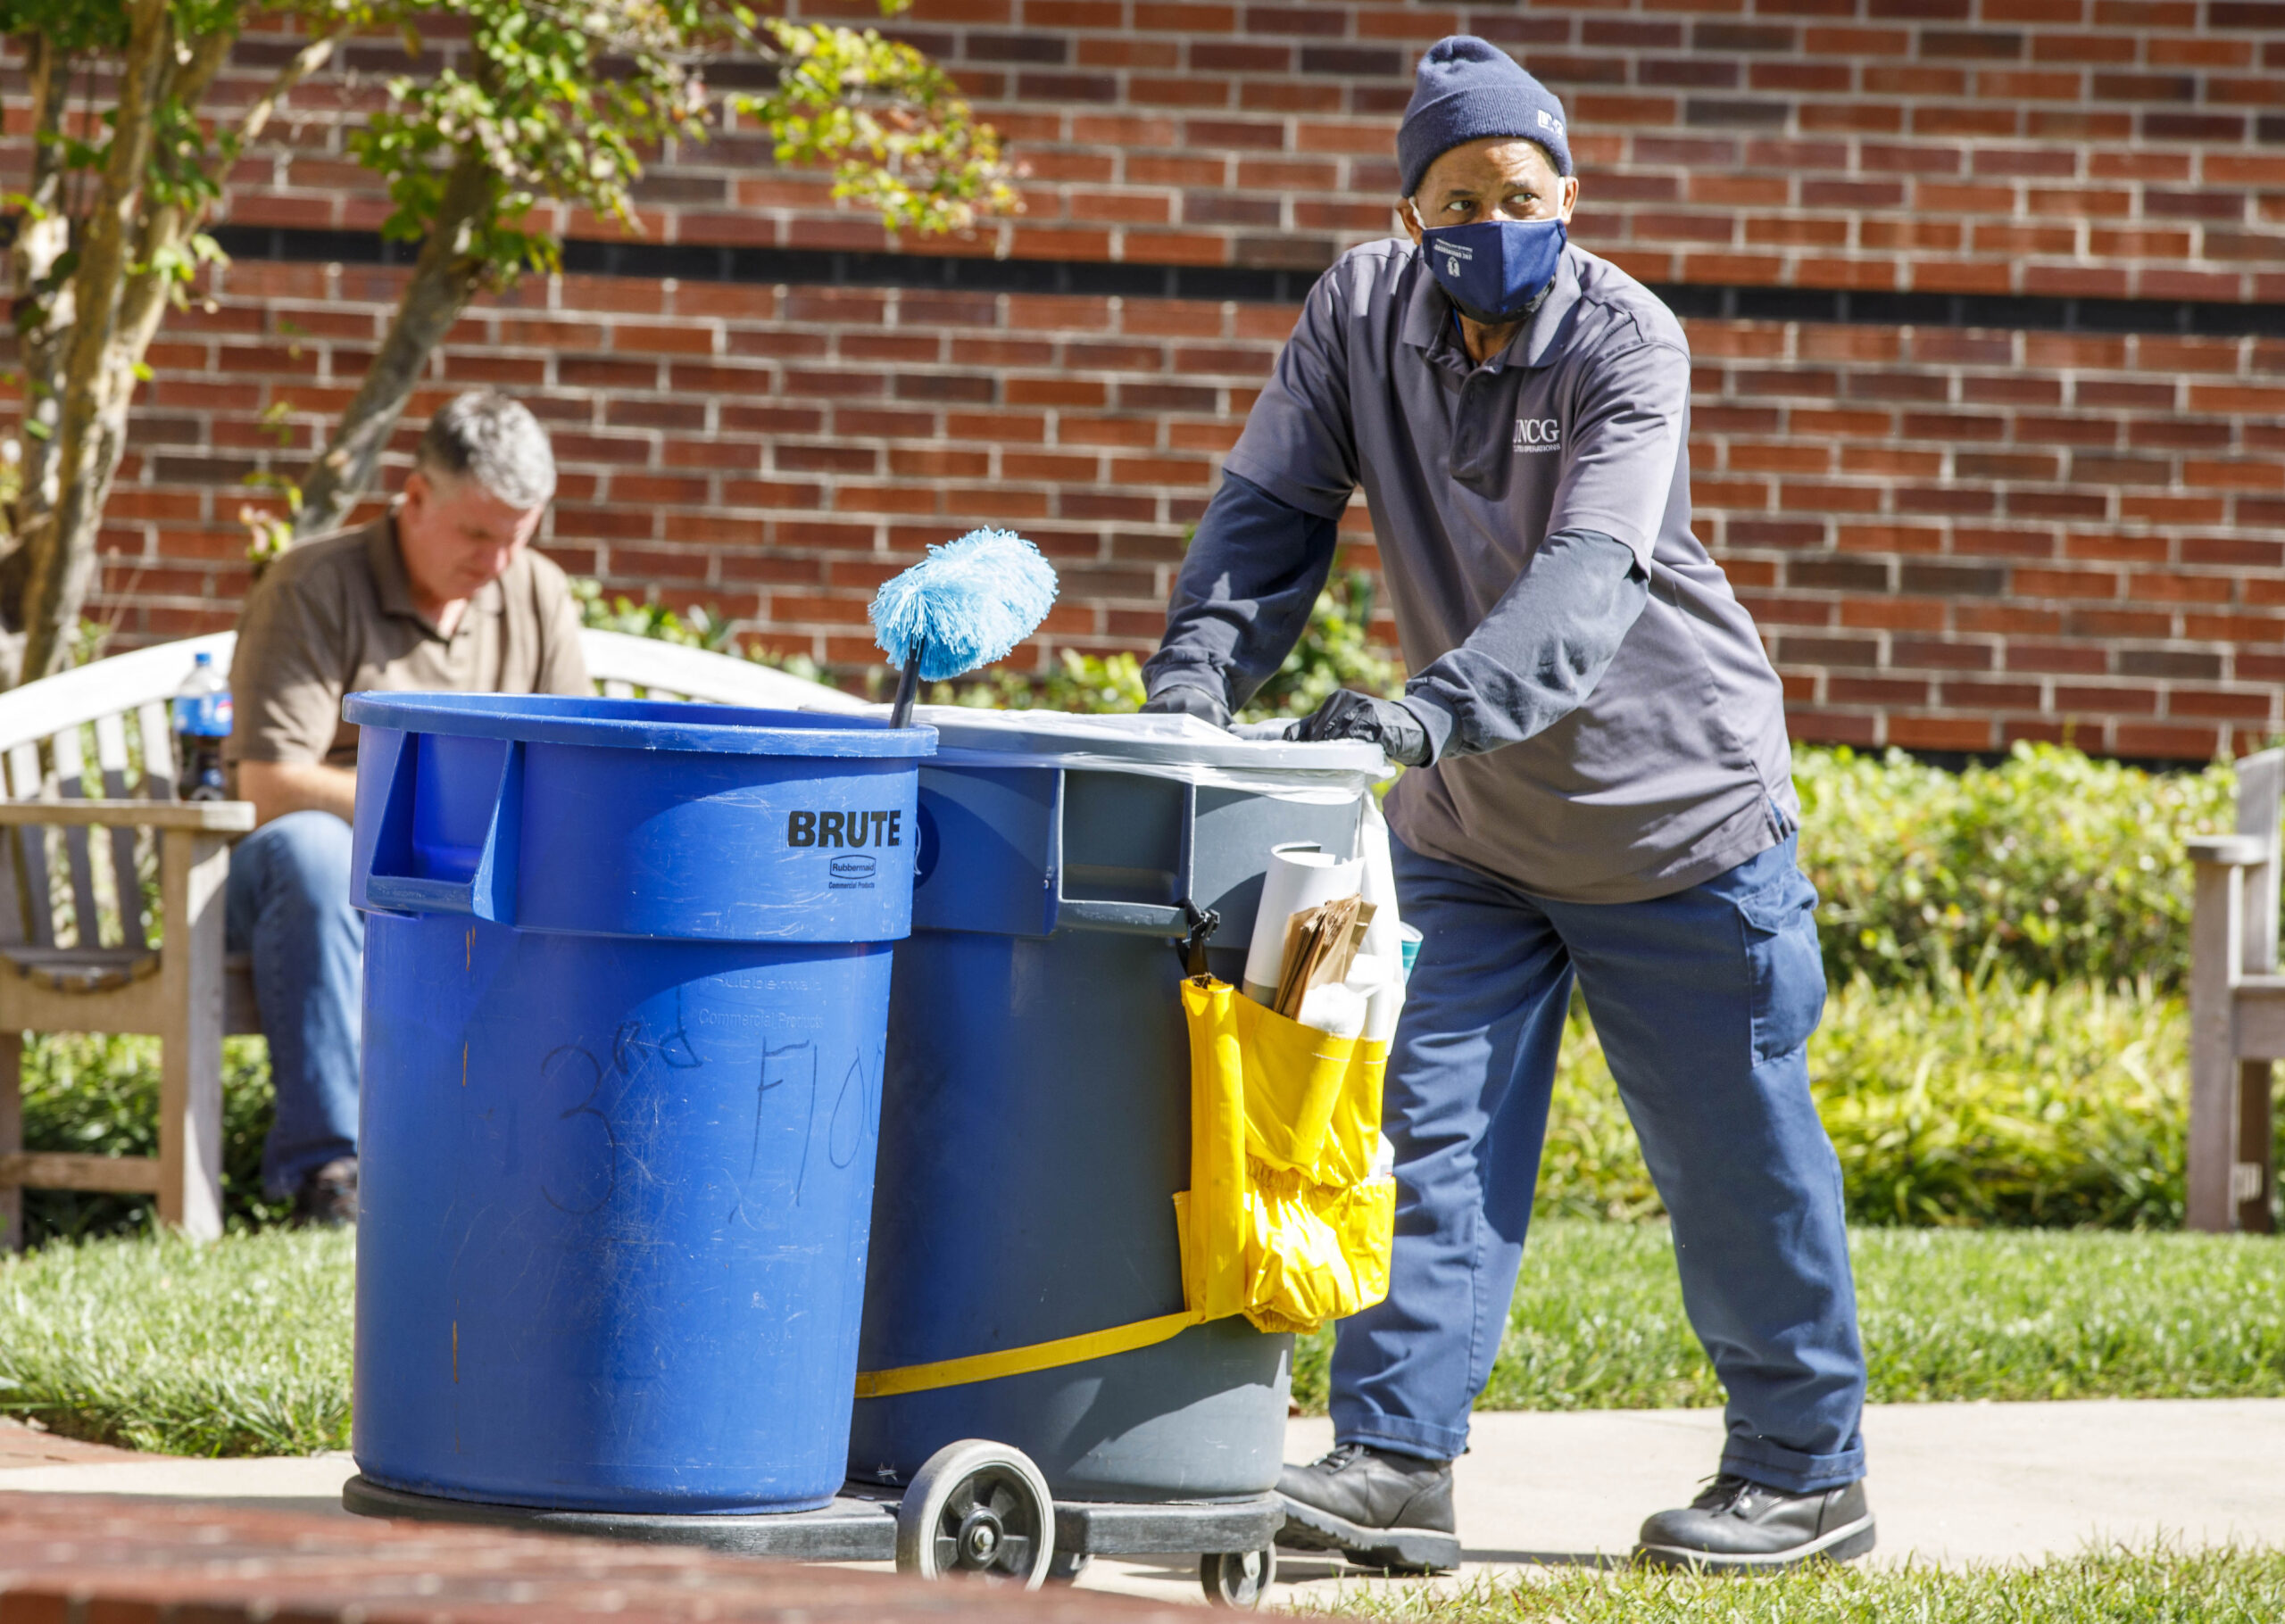 UNCG staffmember Leon Brown moves garbage bins outside.